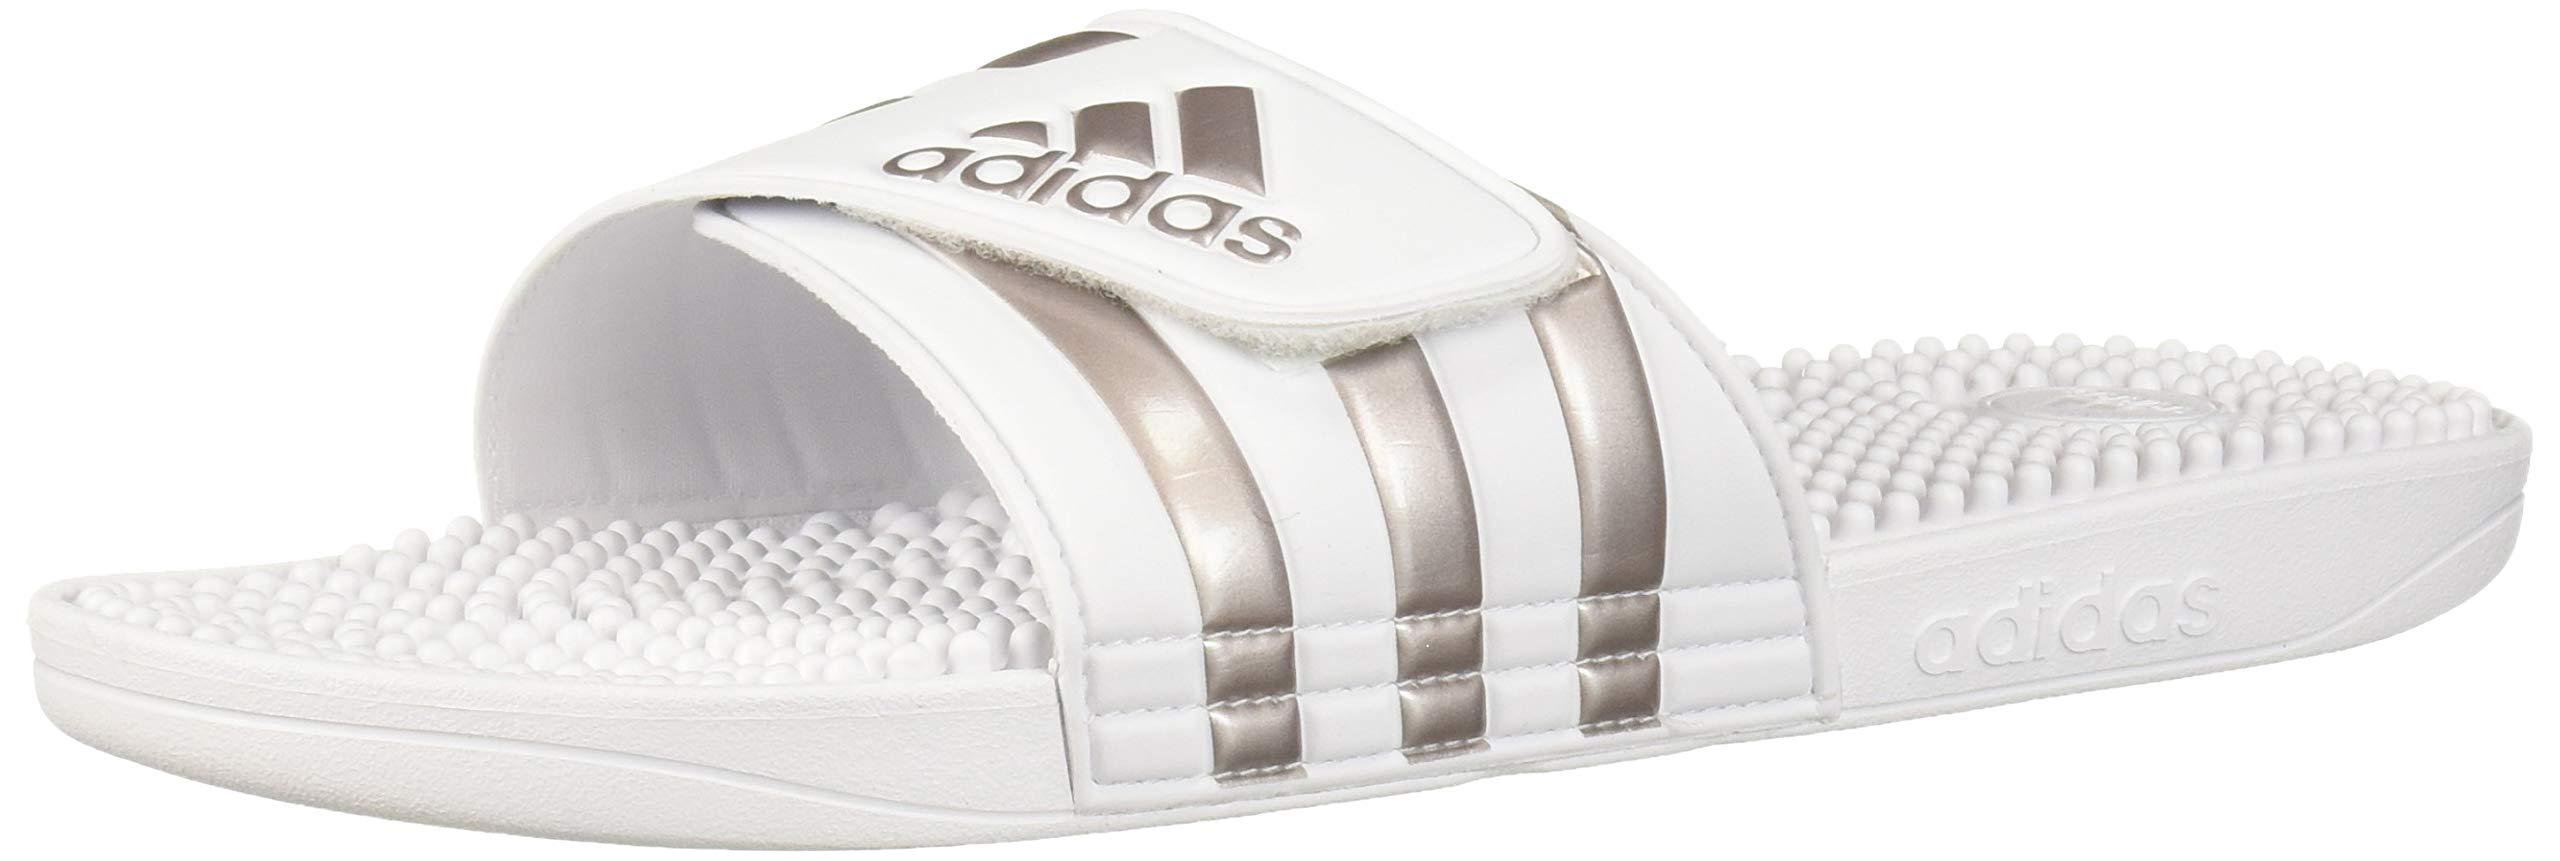 adidas Adissage in White/Platinum Metallic/White (White) | Lyst